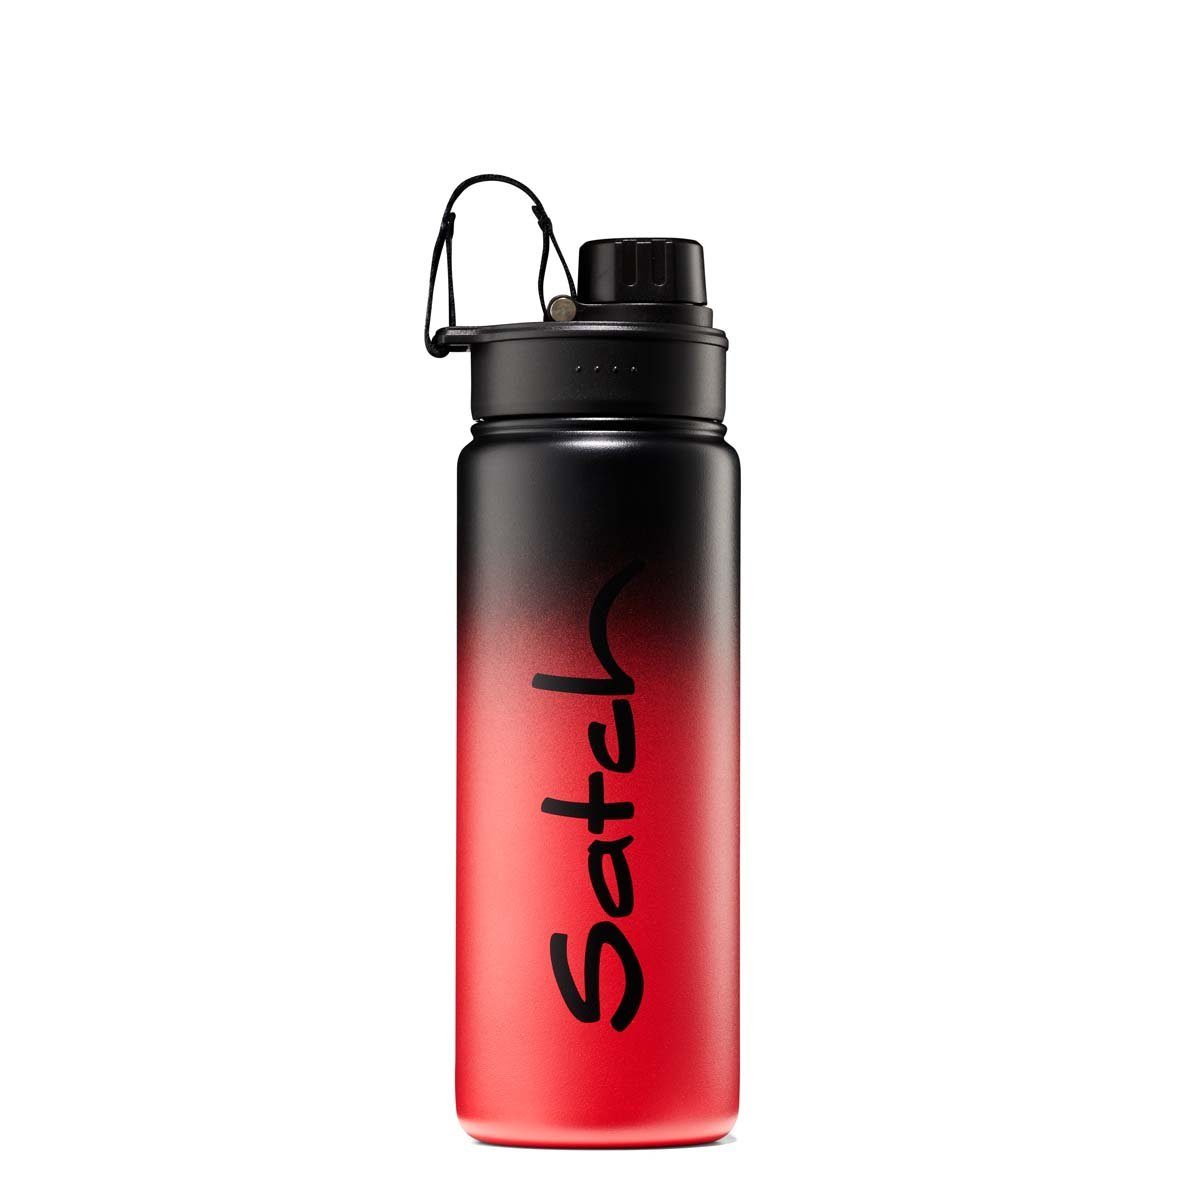 01017-90242-10 Graffiti BPA-frei Black Satch Trinkflasche Edelstahl-Trinkflasche,